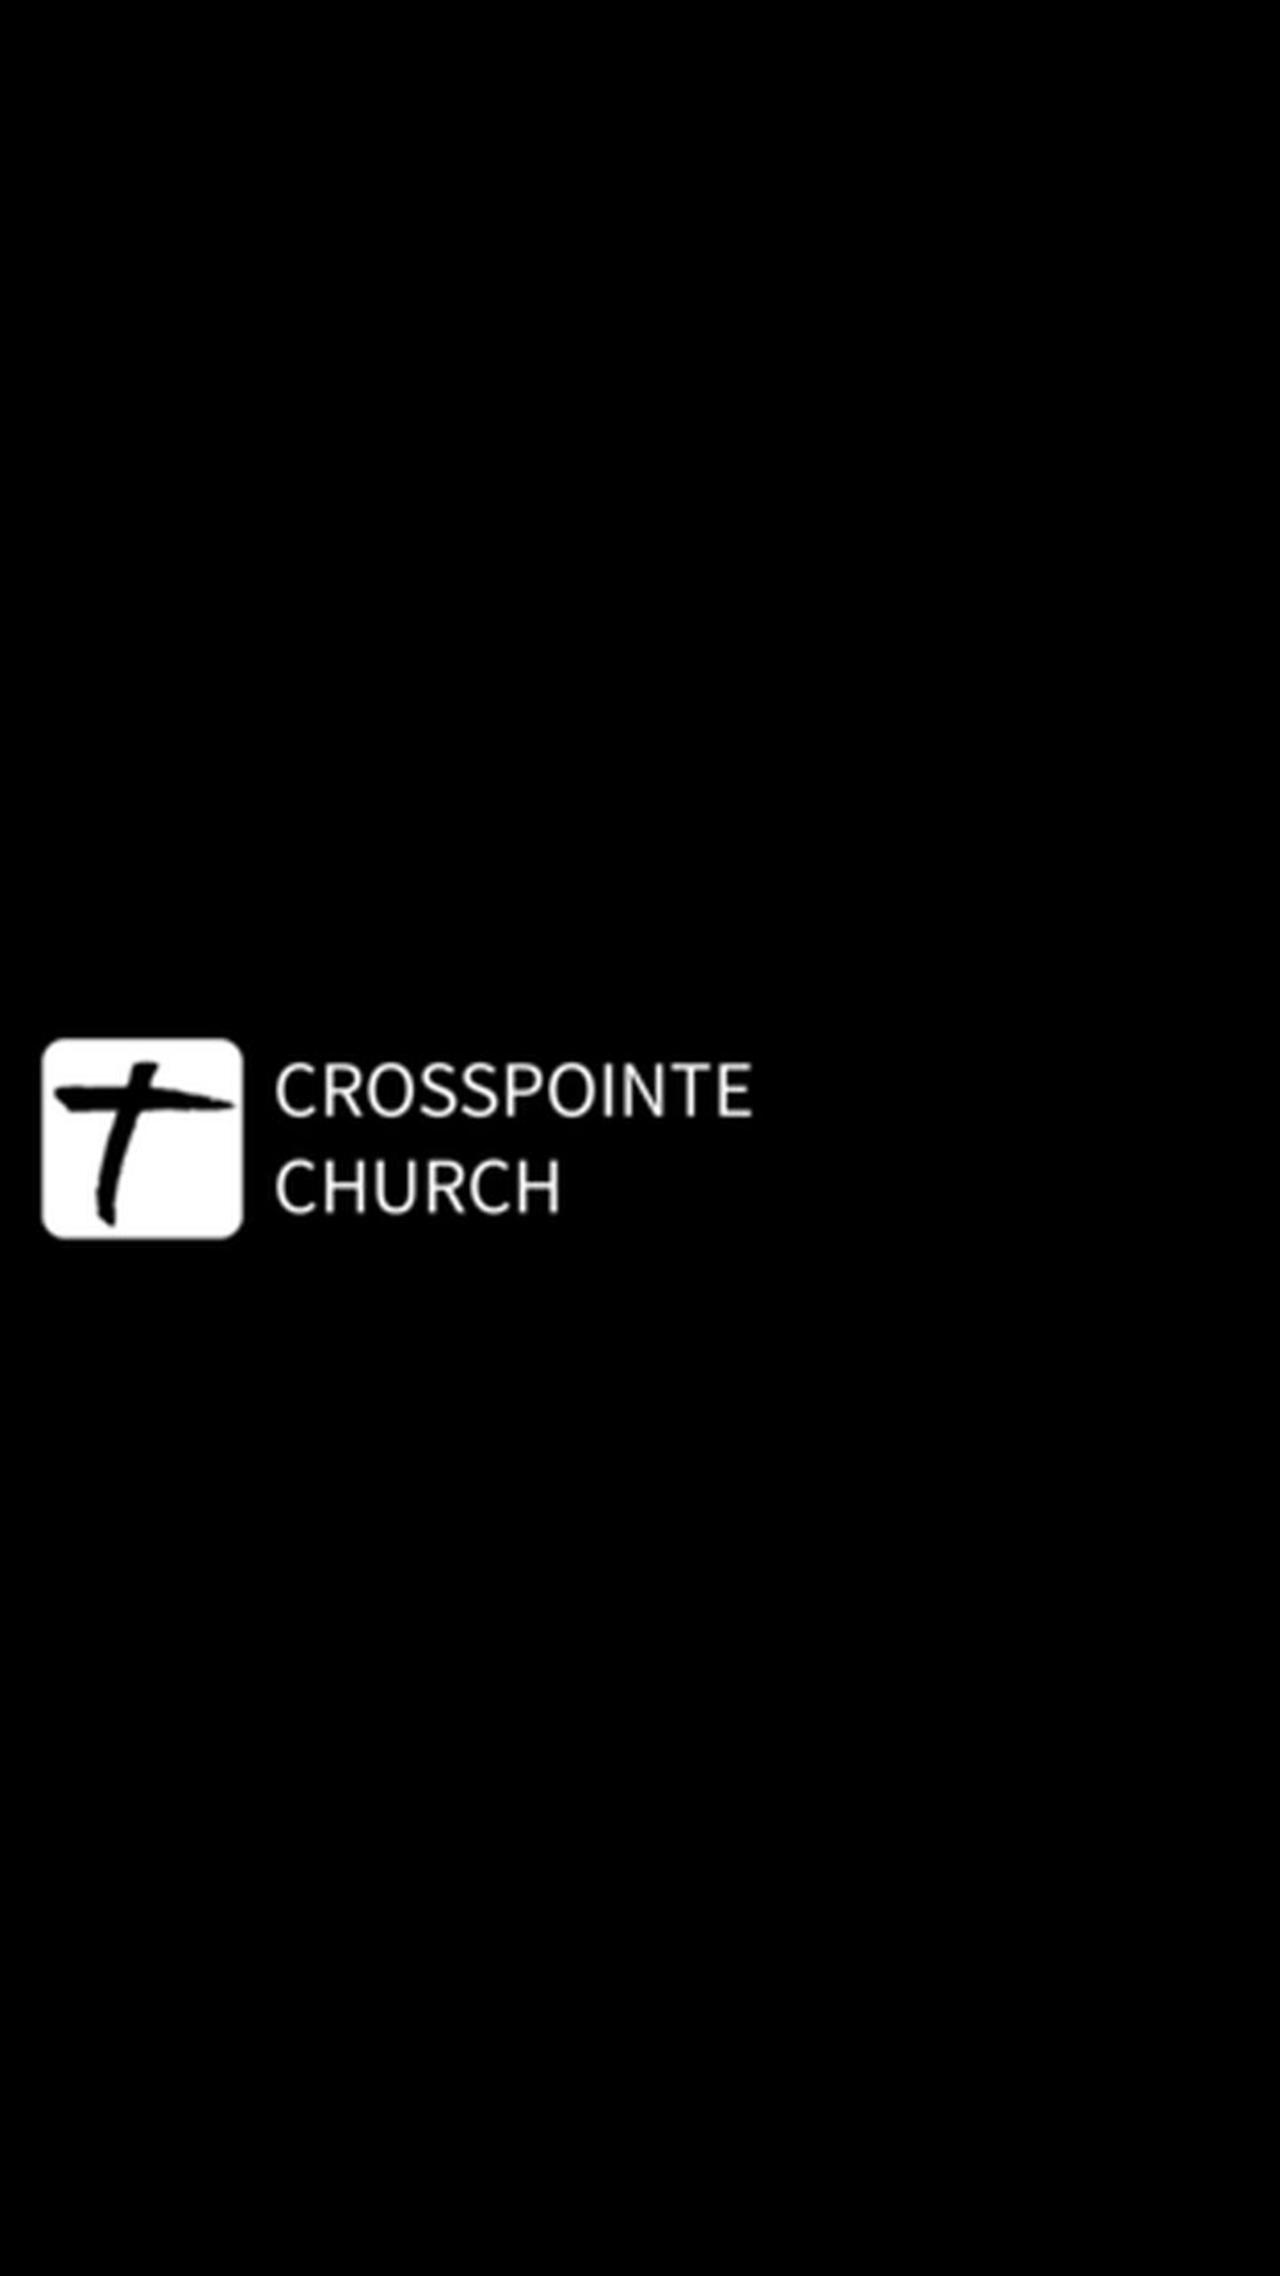 Crosspointe Church, Sarasota Florida